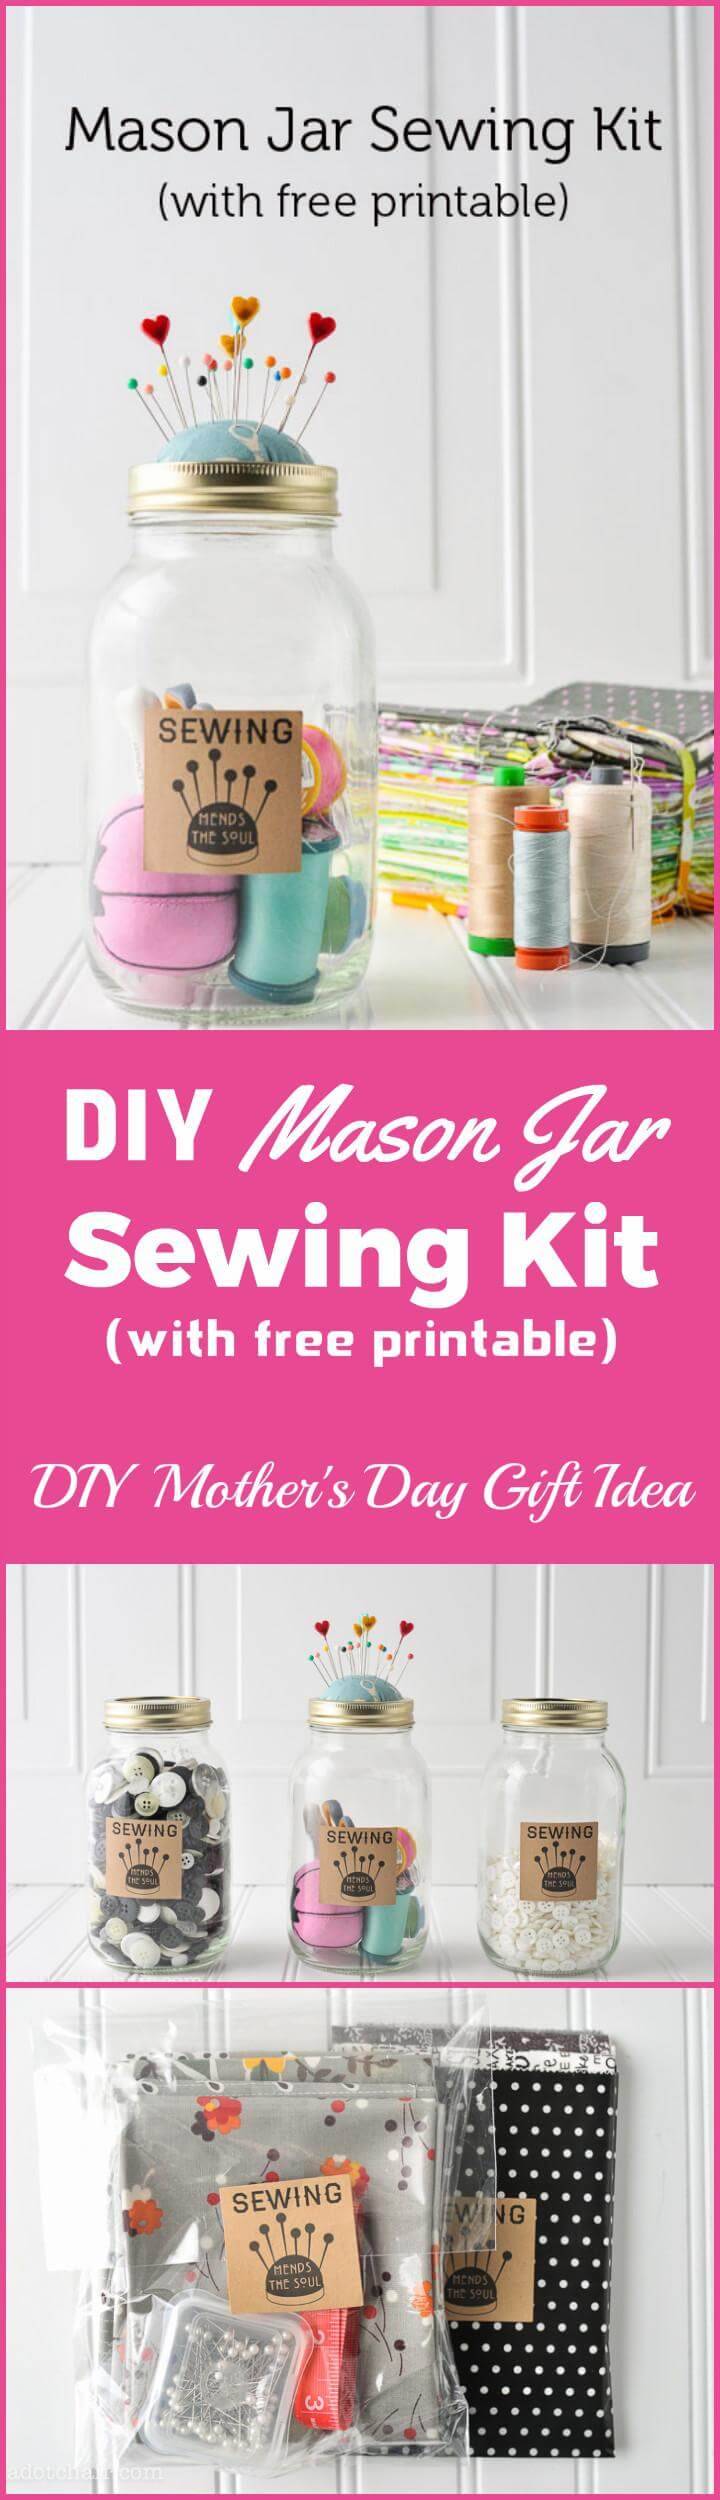 DIY Mason jar sewing kit Mother's Day gift